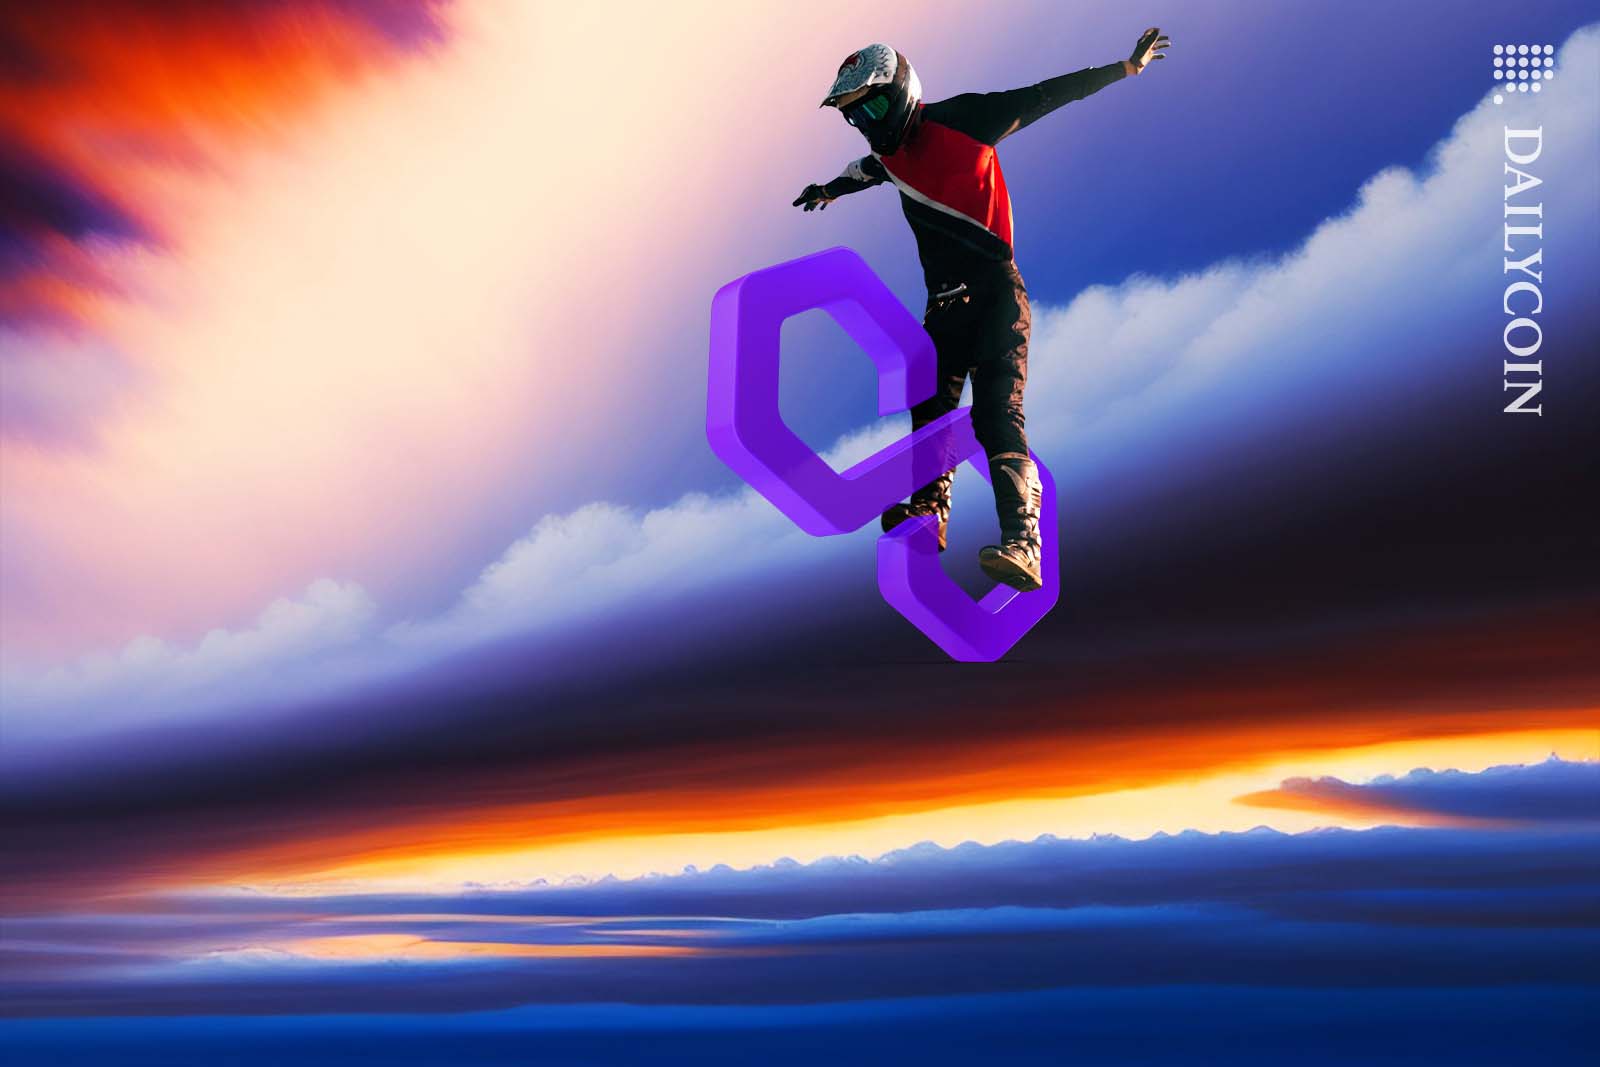 Man mastering a freestyle motocross jump on a purple Polygon logo.